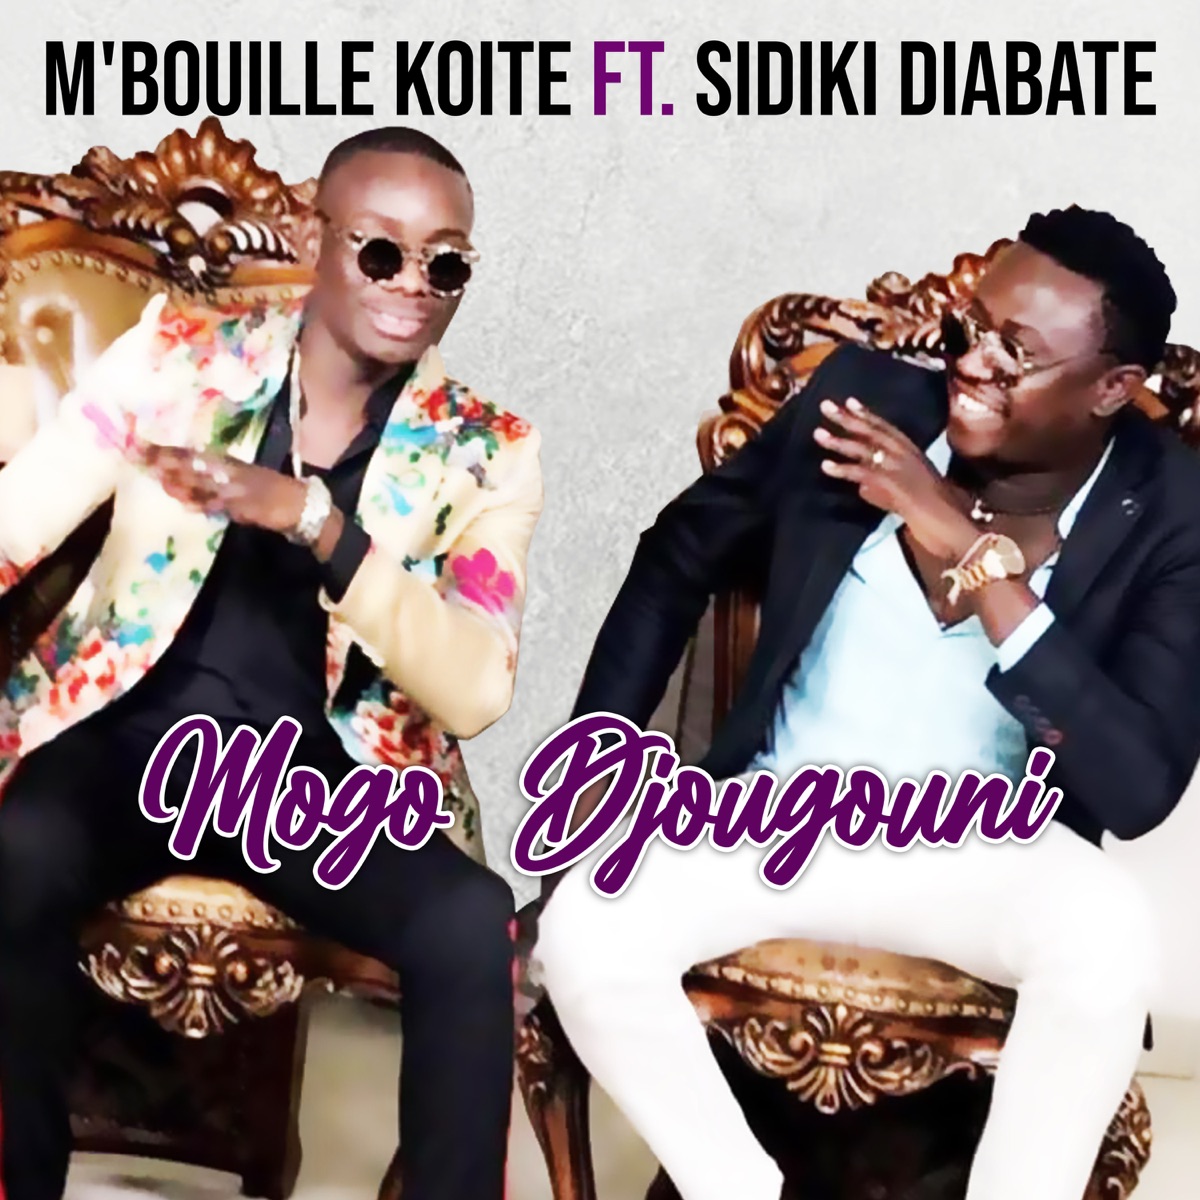 Fais moi confiance - Single - Album by Sidiki Diabaté - Apple Music